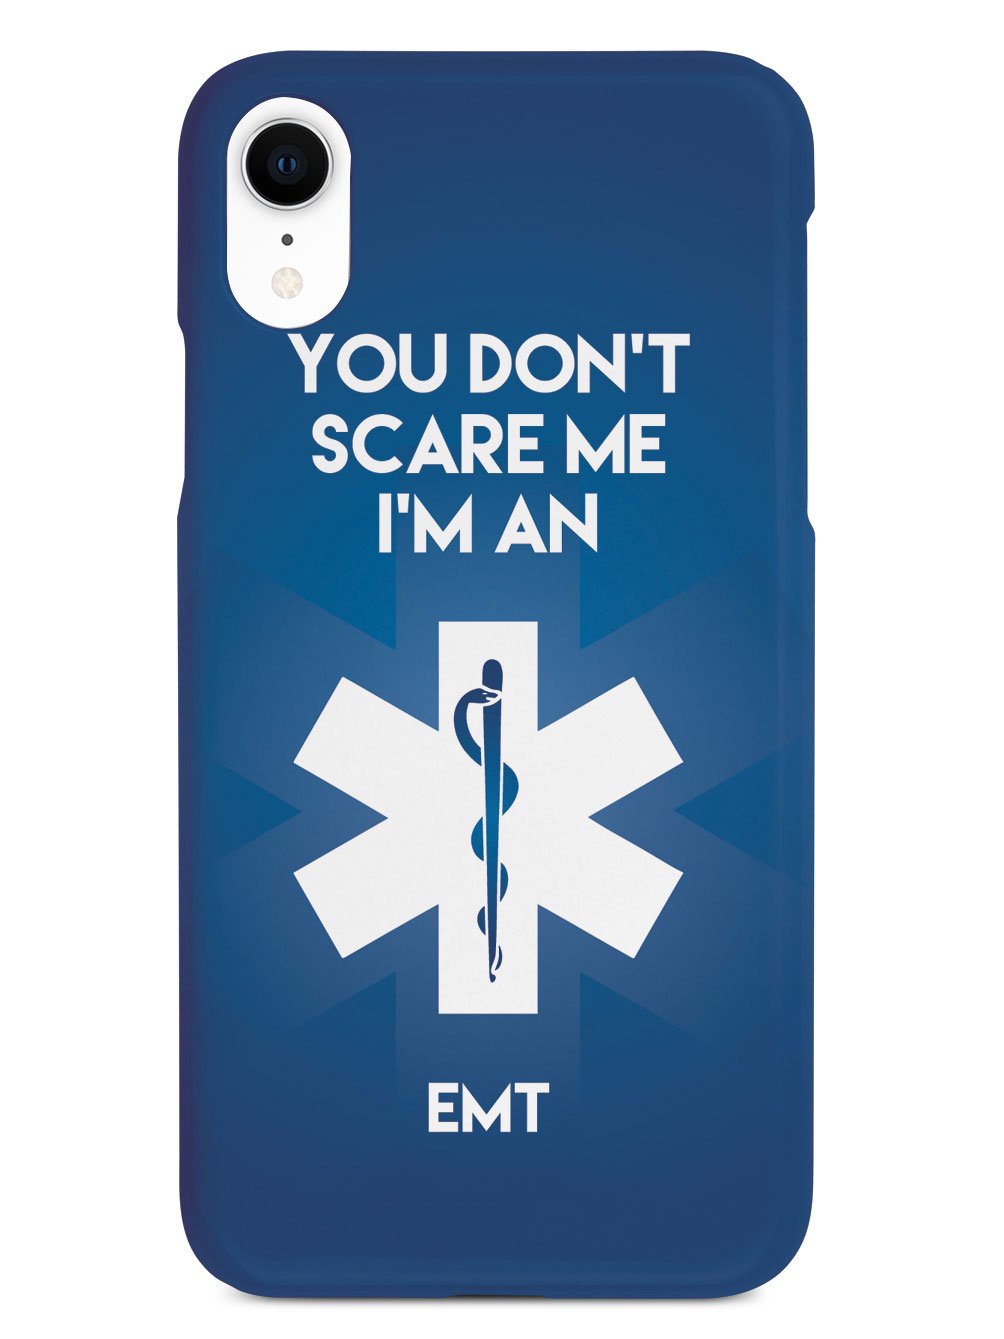 You Don't Scare Me, I'm an EMT Case